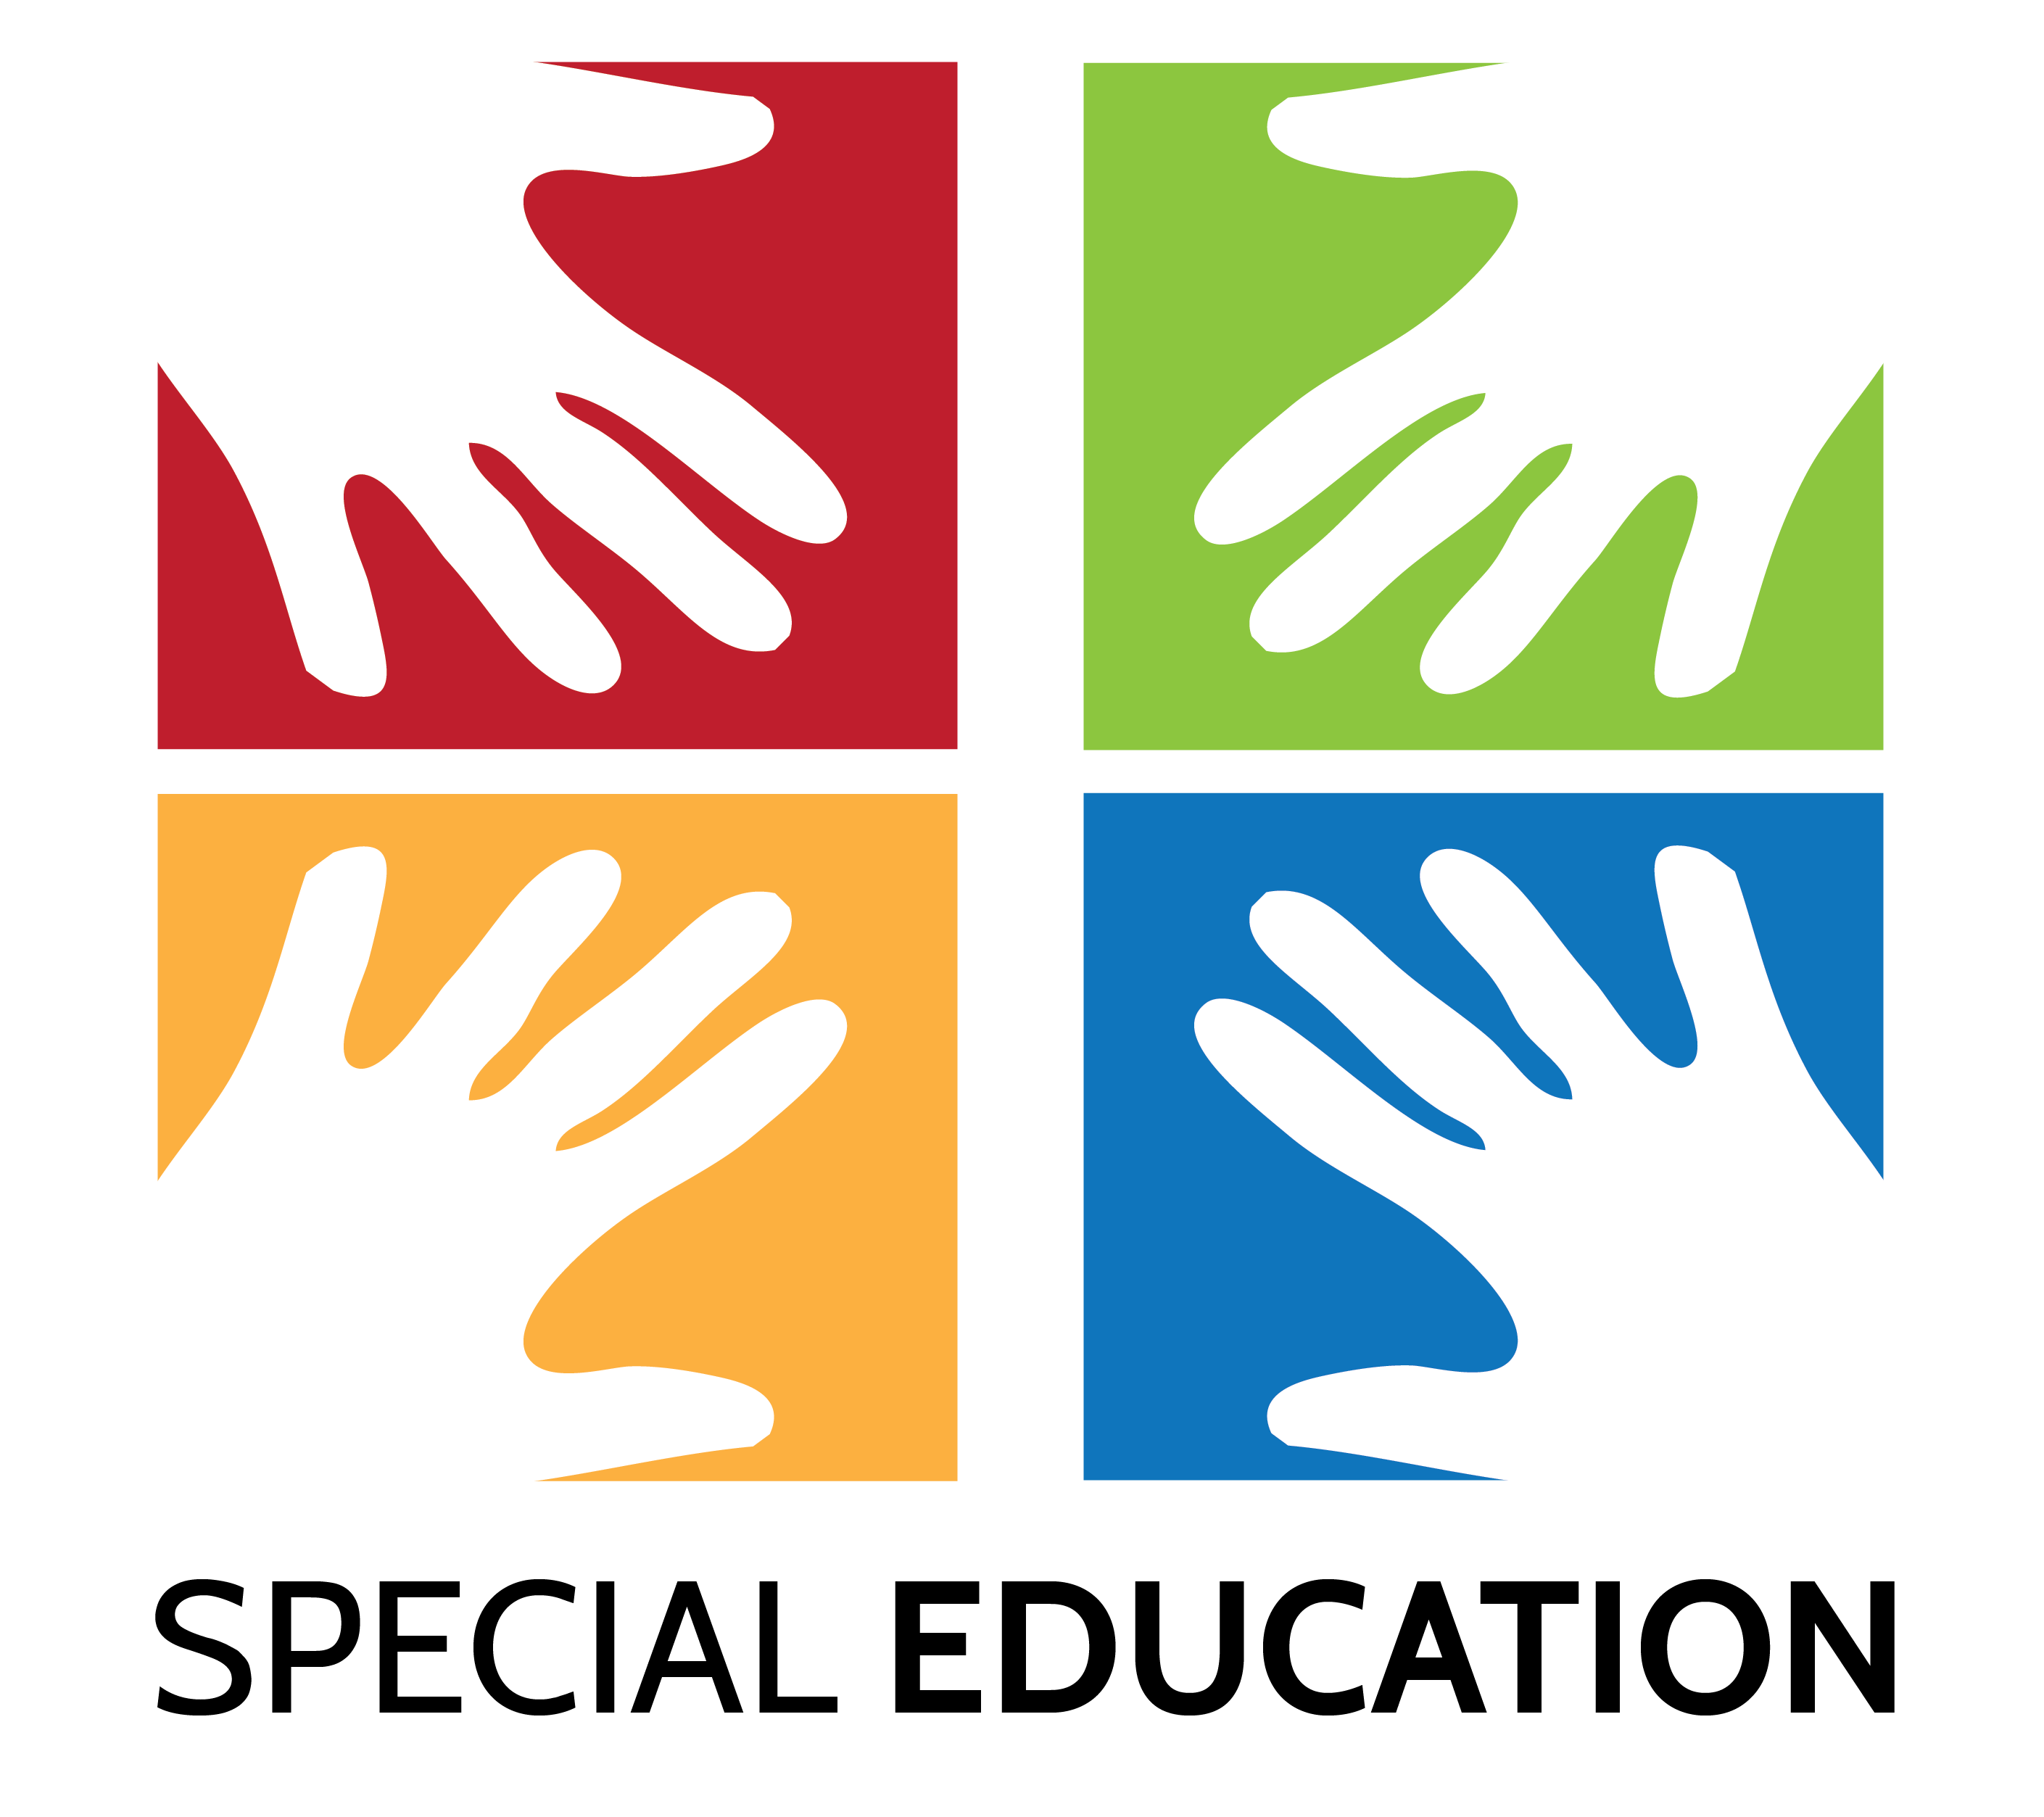 Special Education Symbols